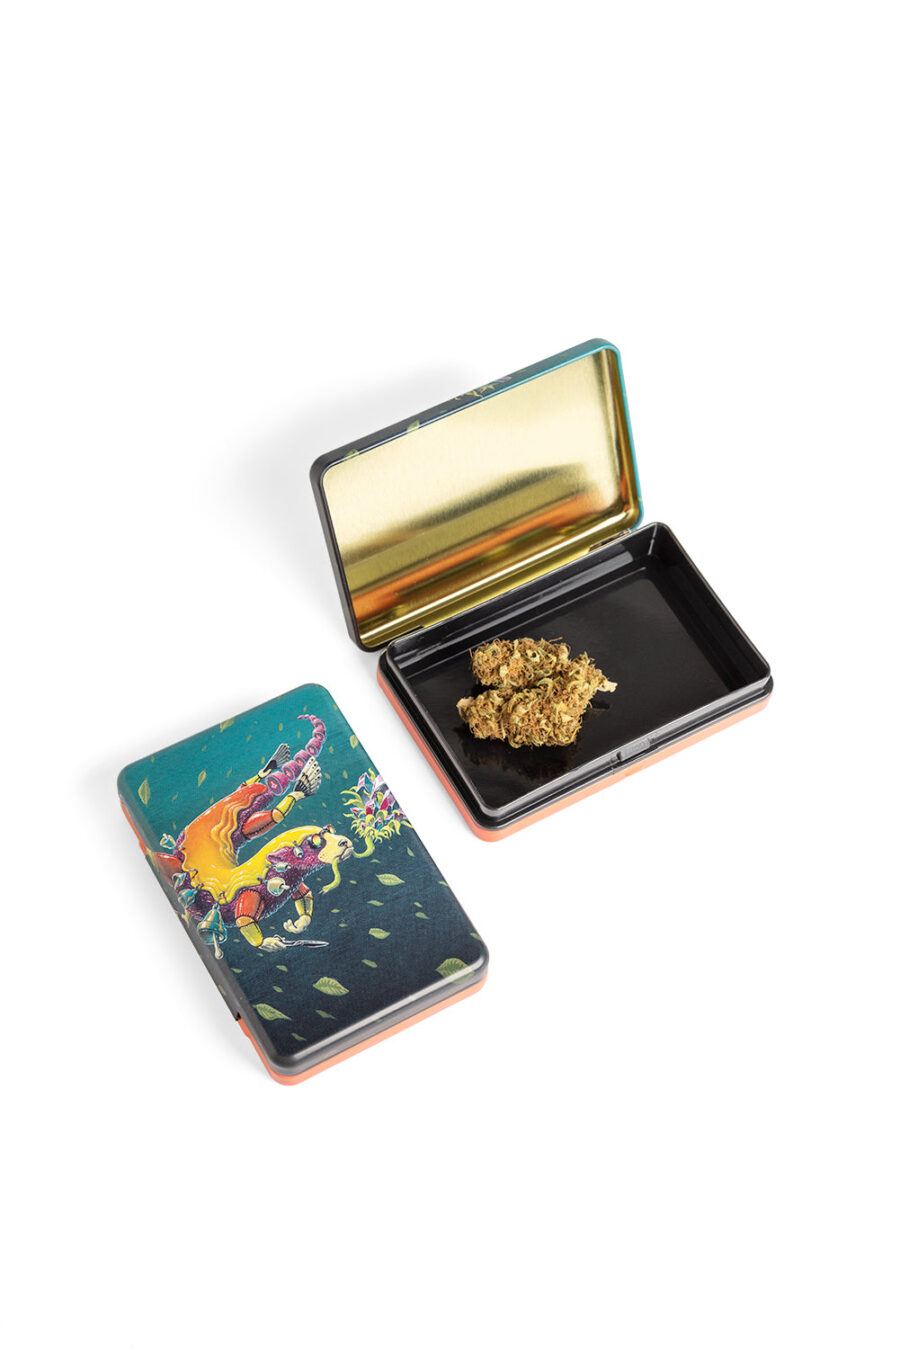 420 Stash Box Accessoire für Cannabis